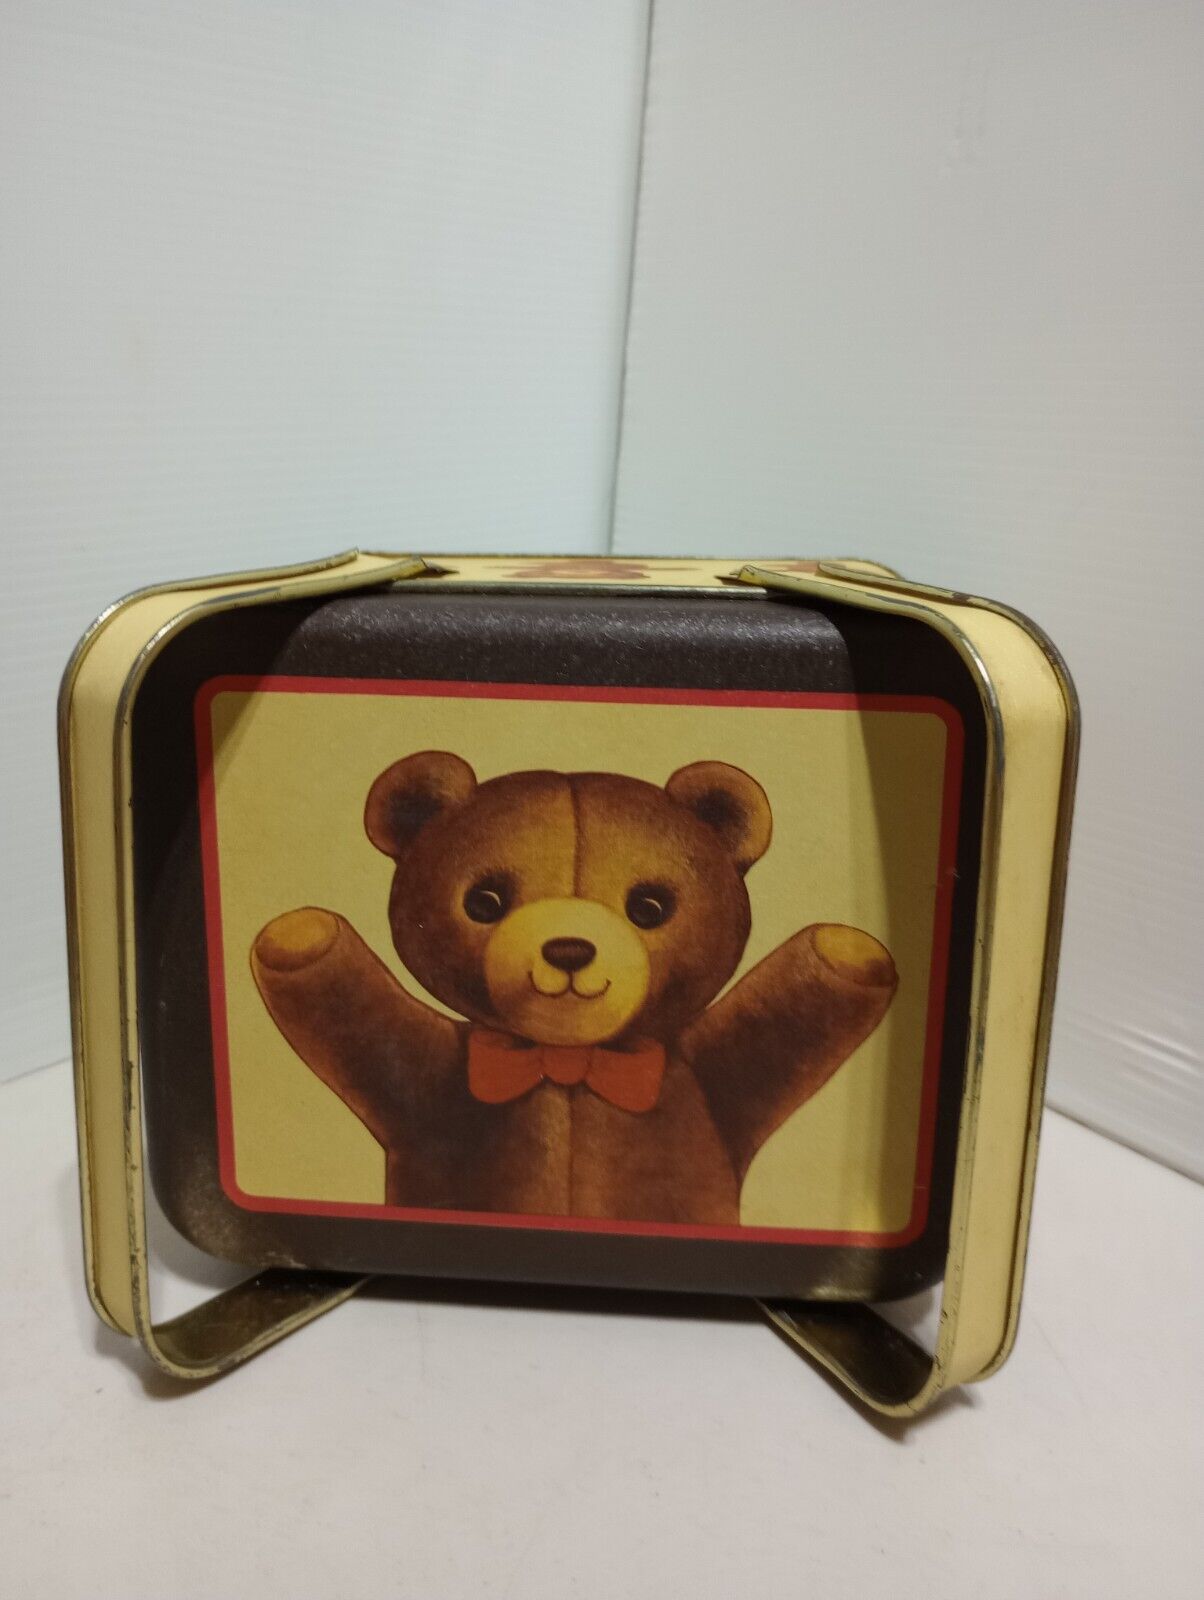 1983 Bristol ware Vintage Tin Box with Handles and Bear Design